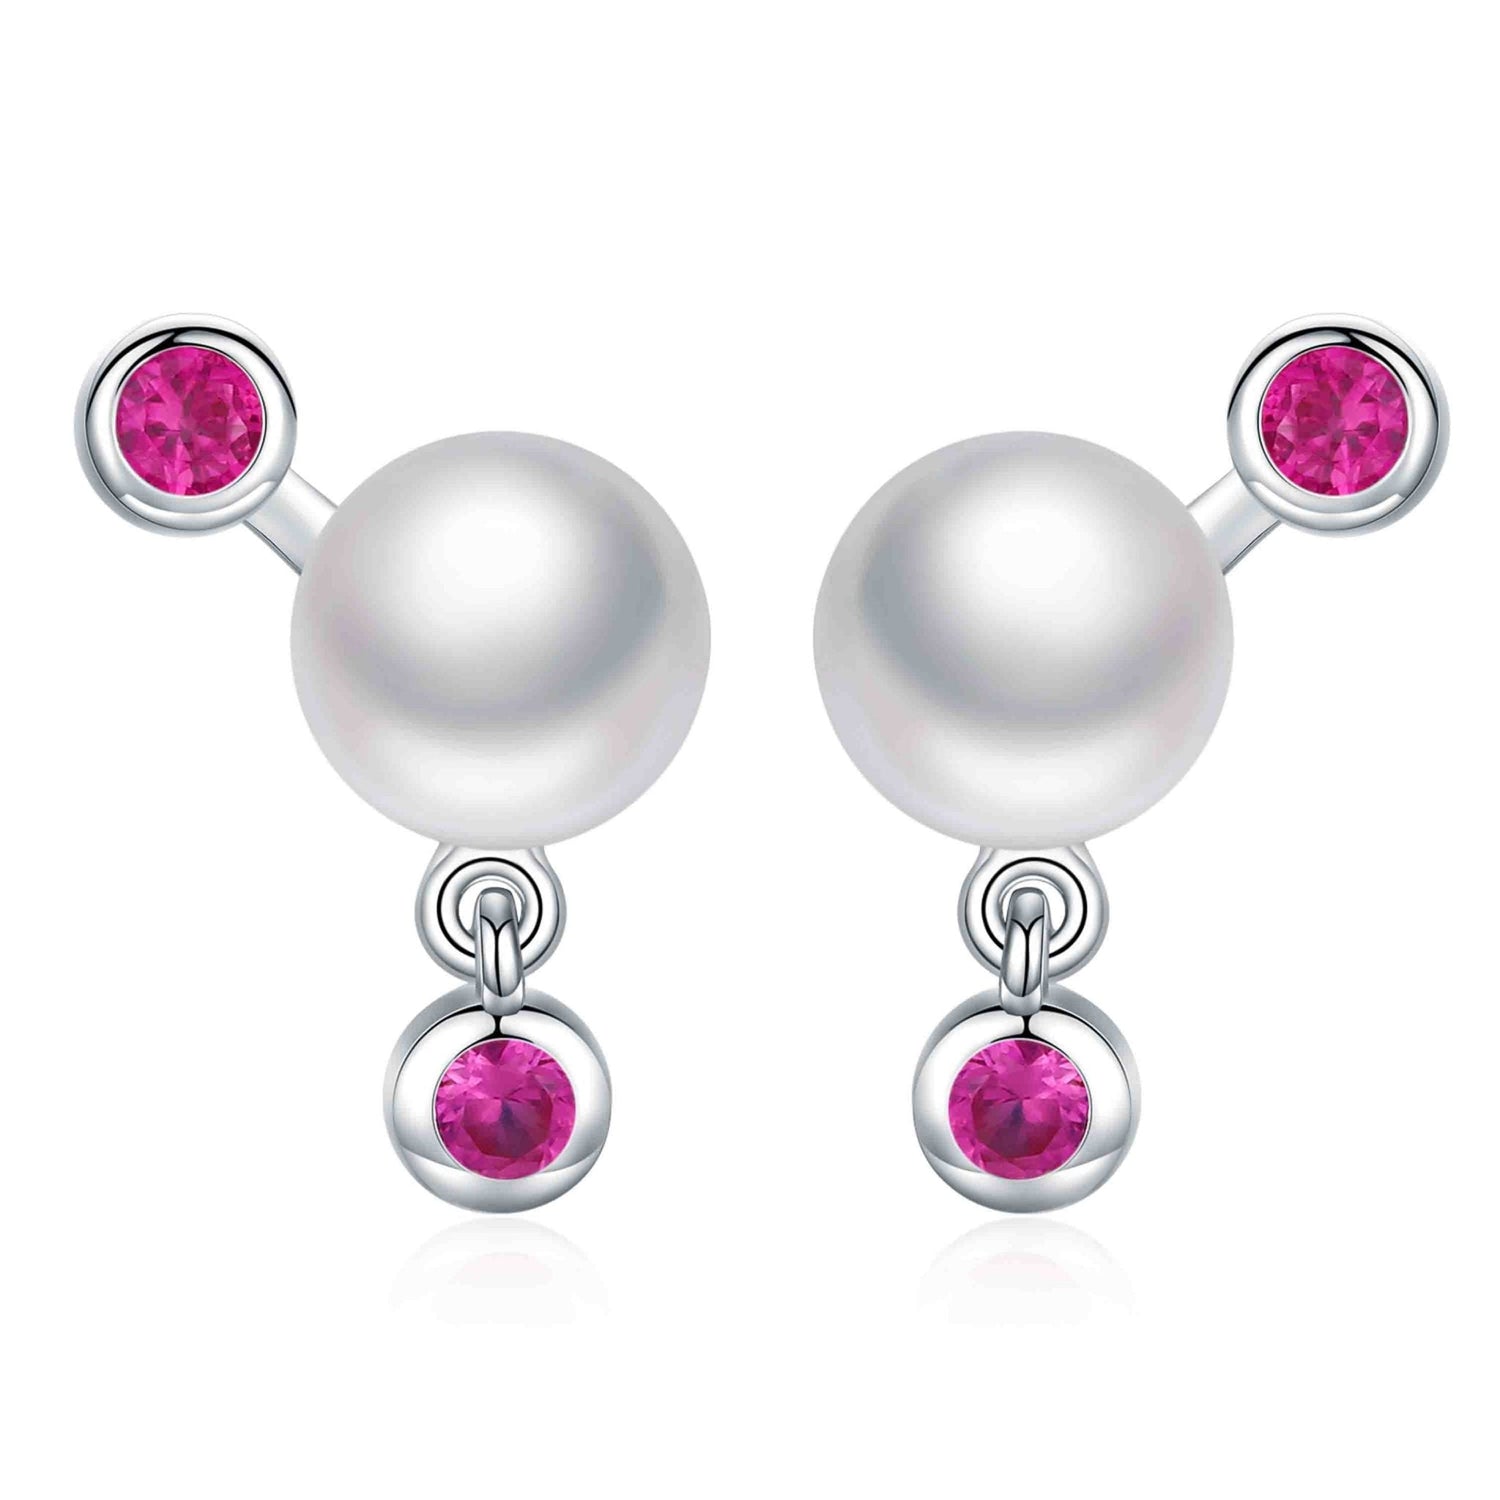 2 in 1 Pearl Earrings - Timeless Pearl